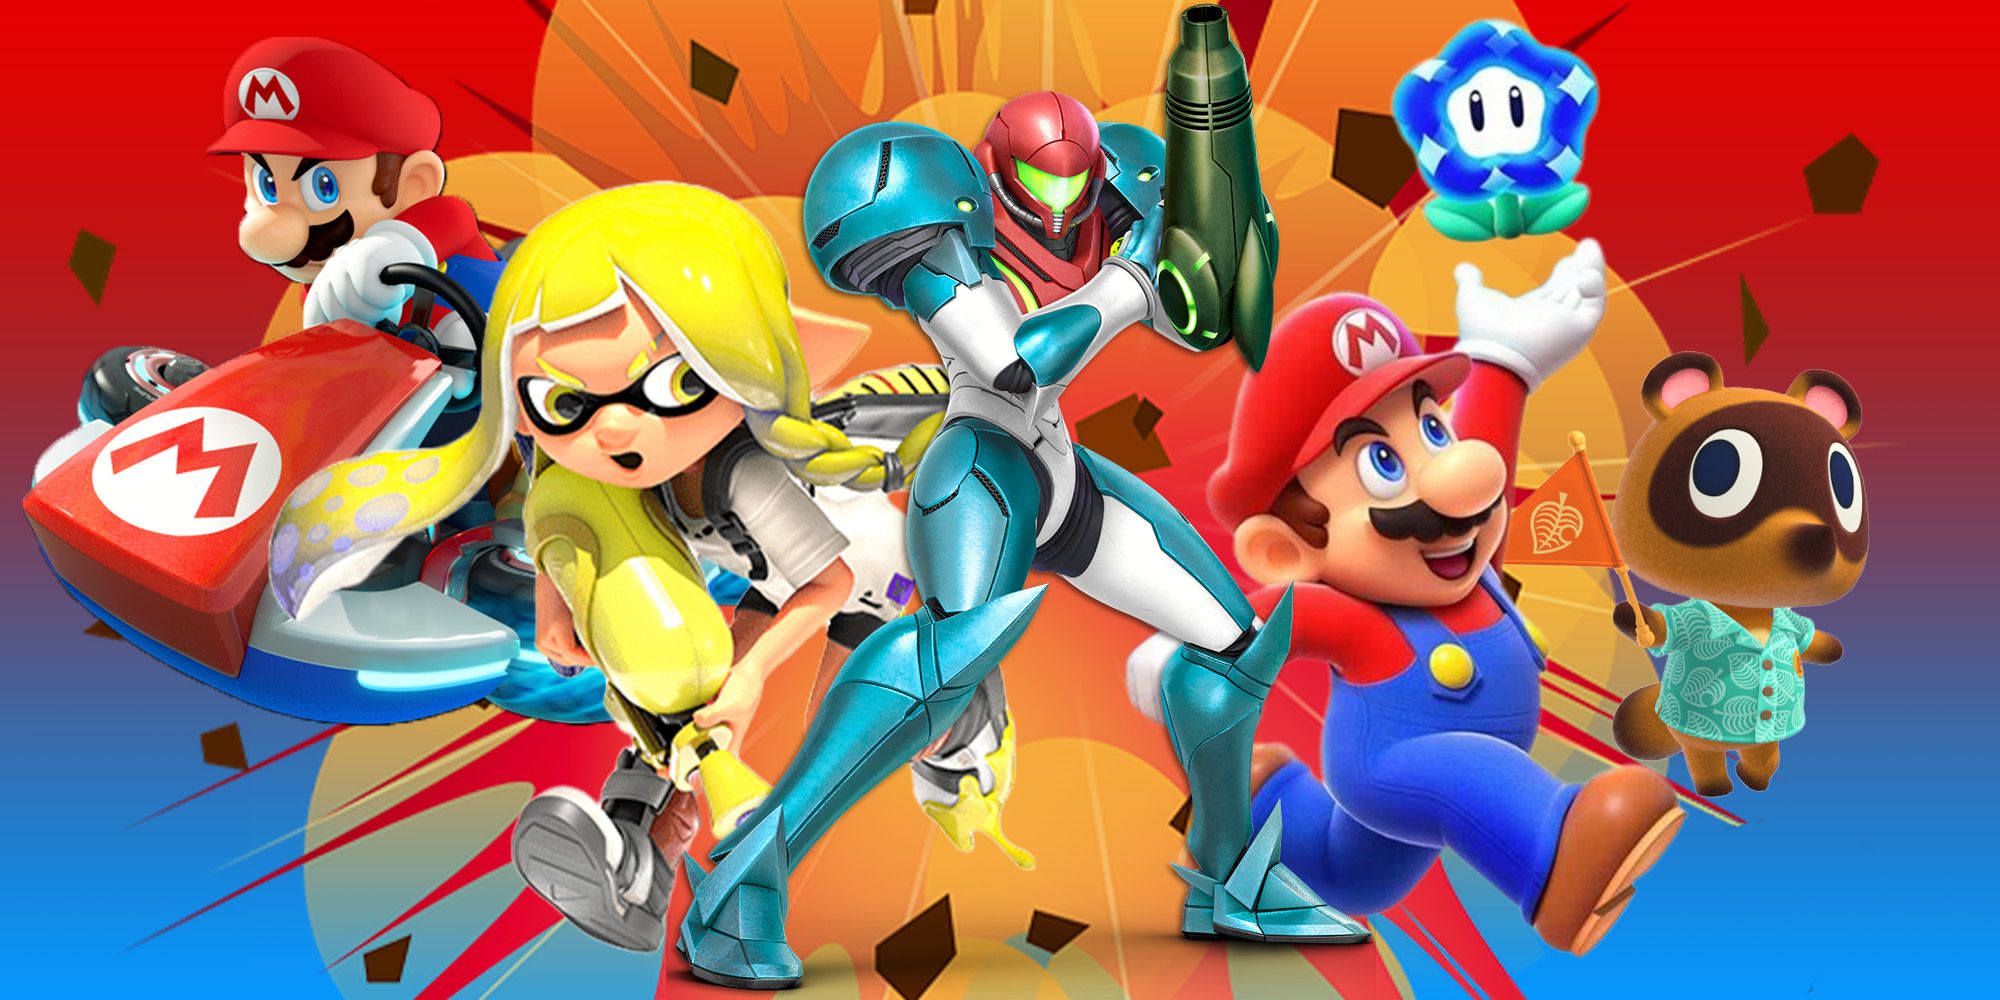 Colagem de jogos Nintendo Switch.  Mario Kart, Splatoon, Metroid Dread, Mario e Animal Crossing representados